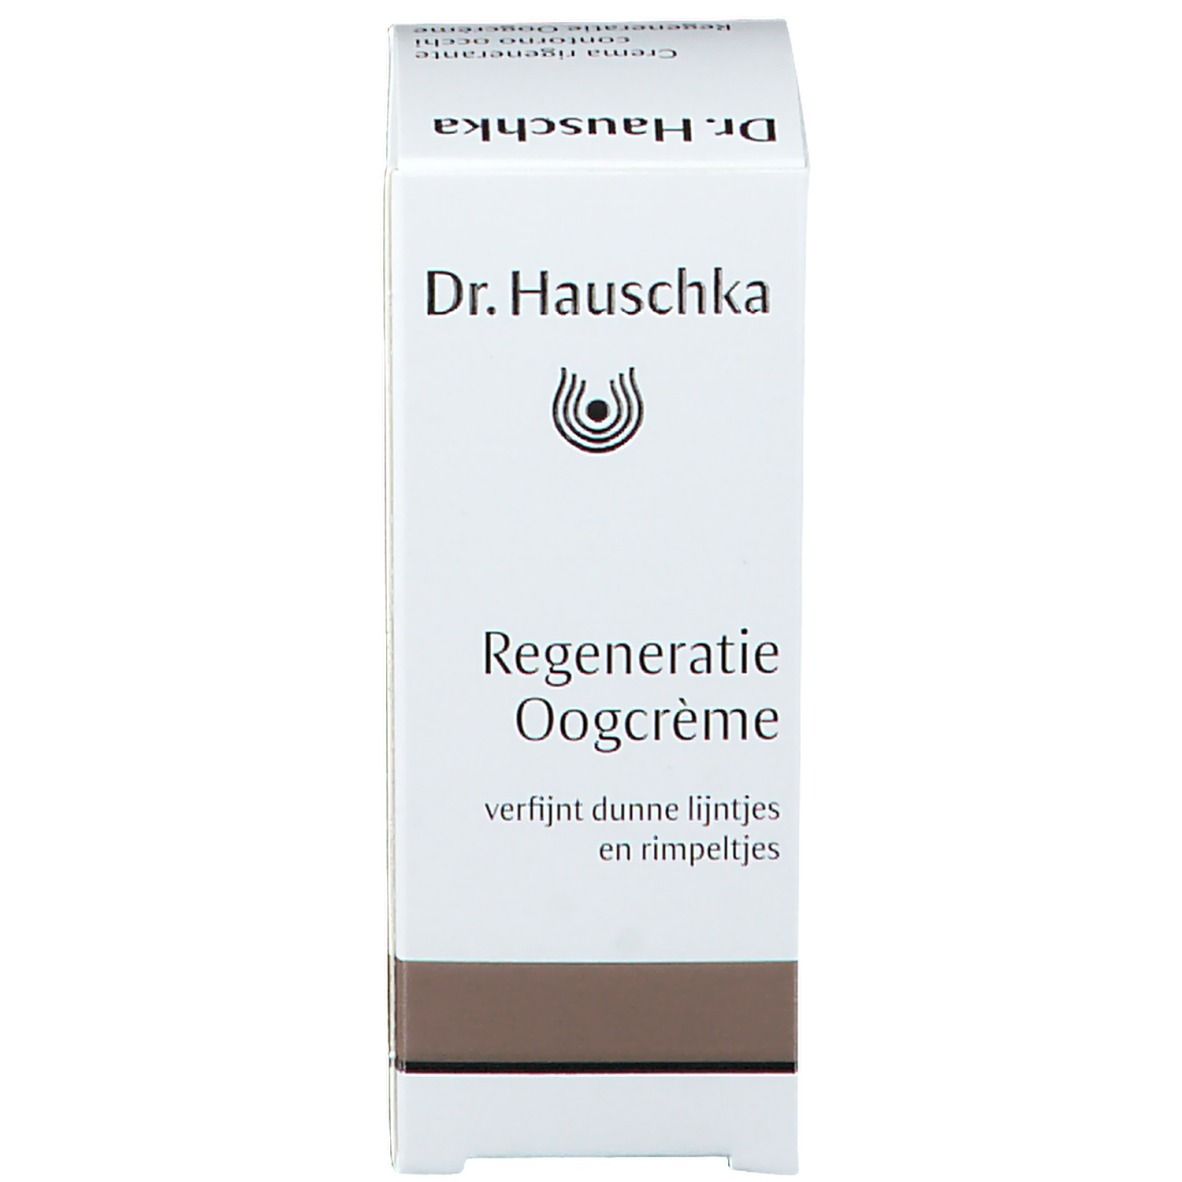 Dr. Hauschka Regeneratie Oogcrème